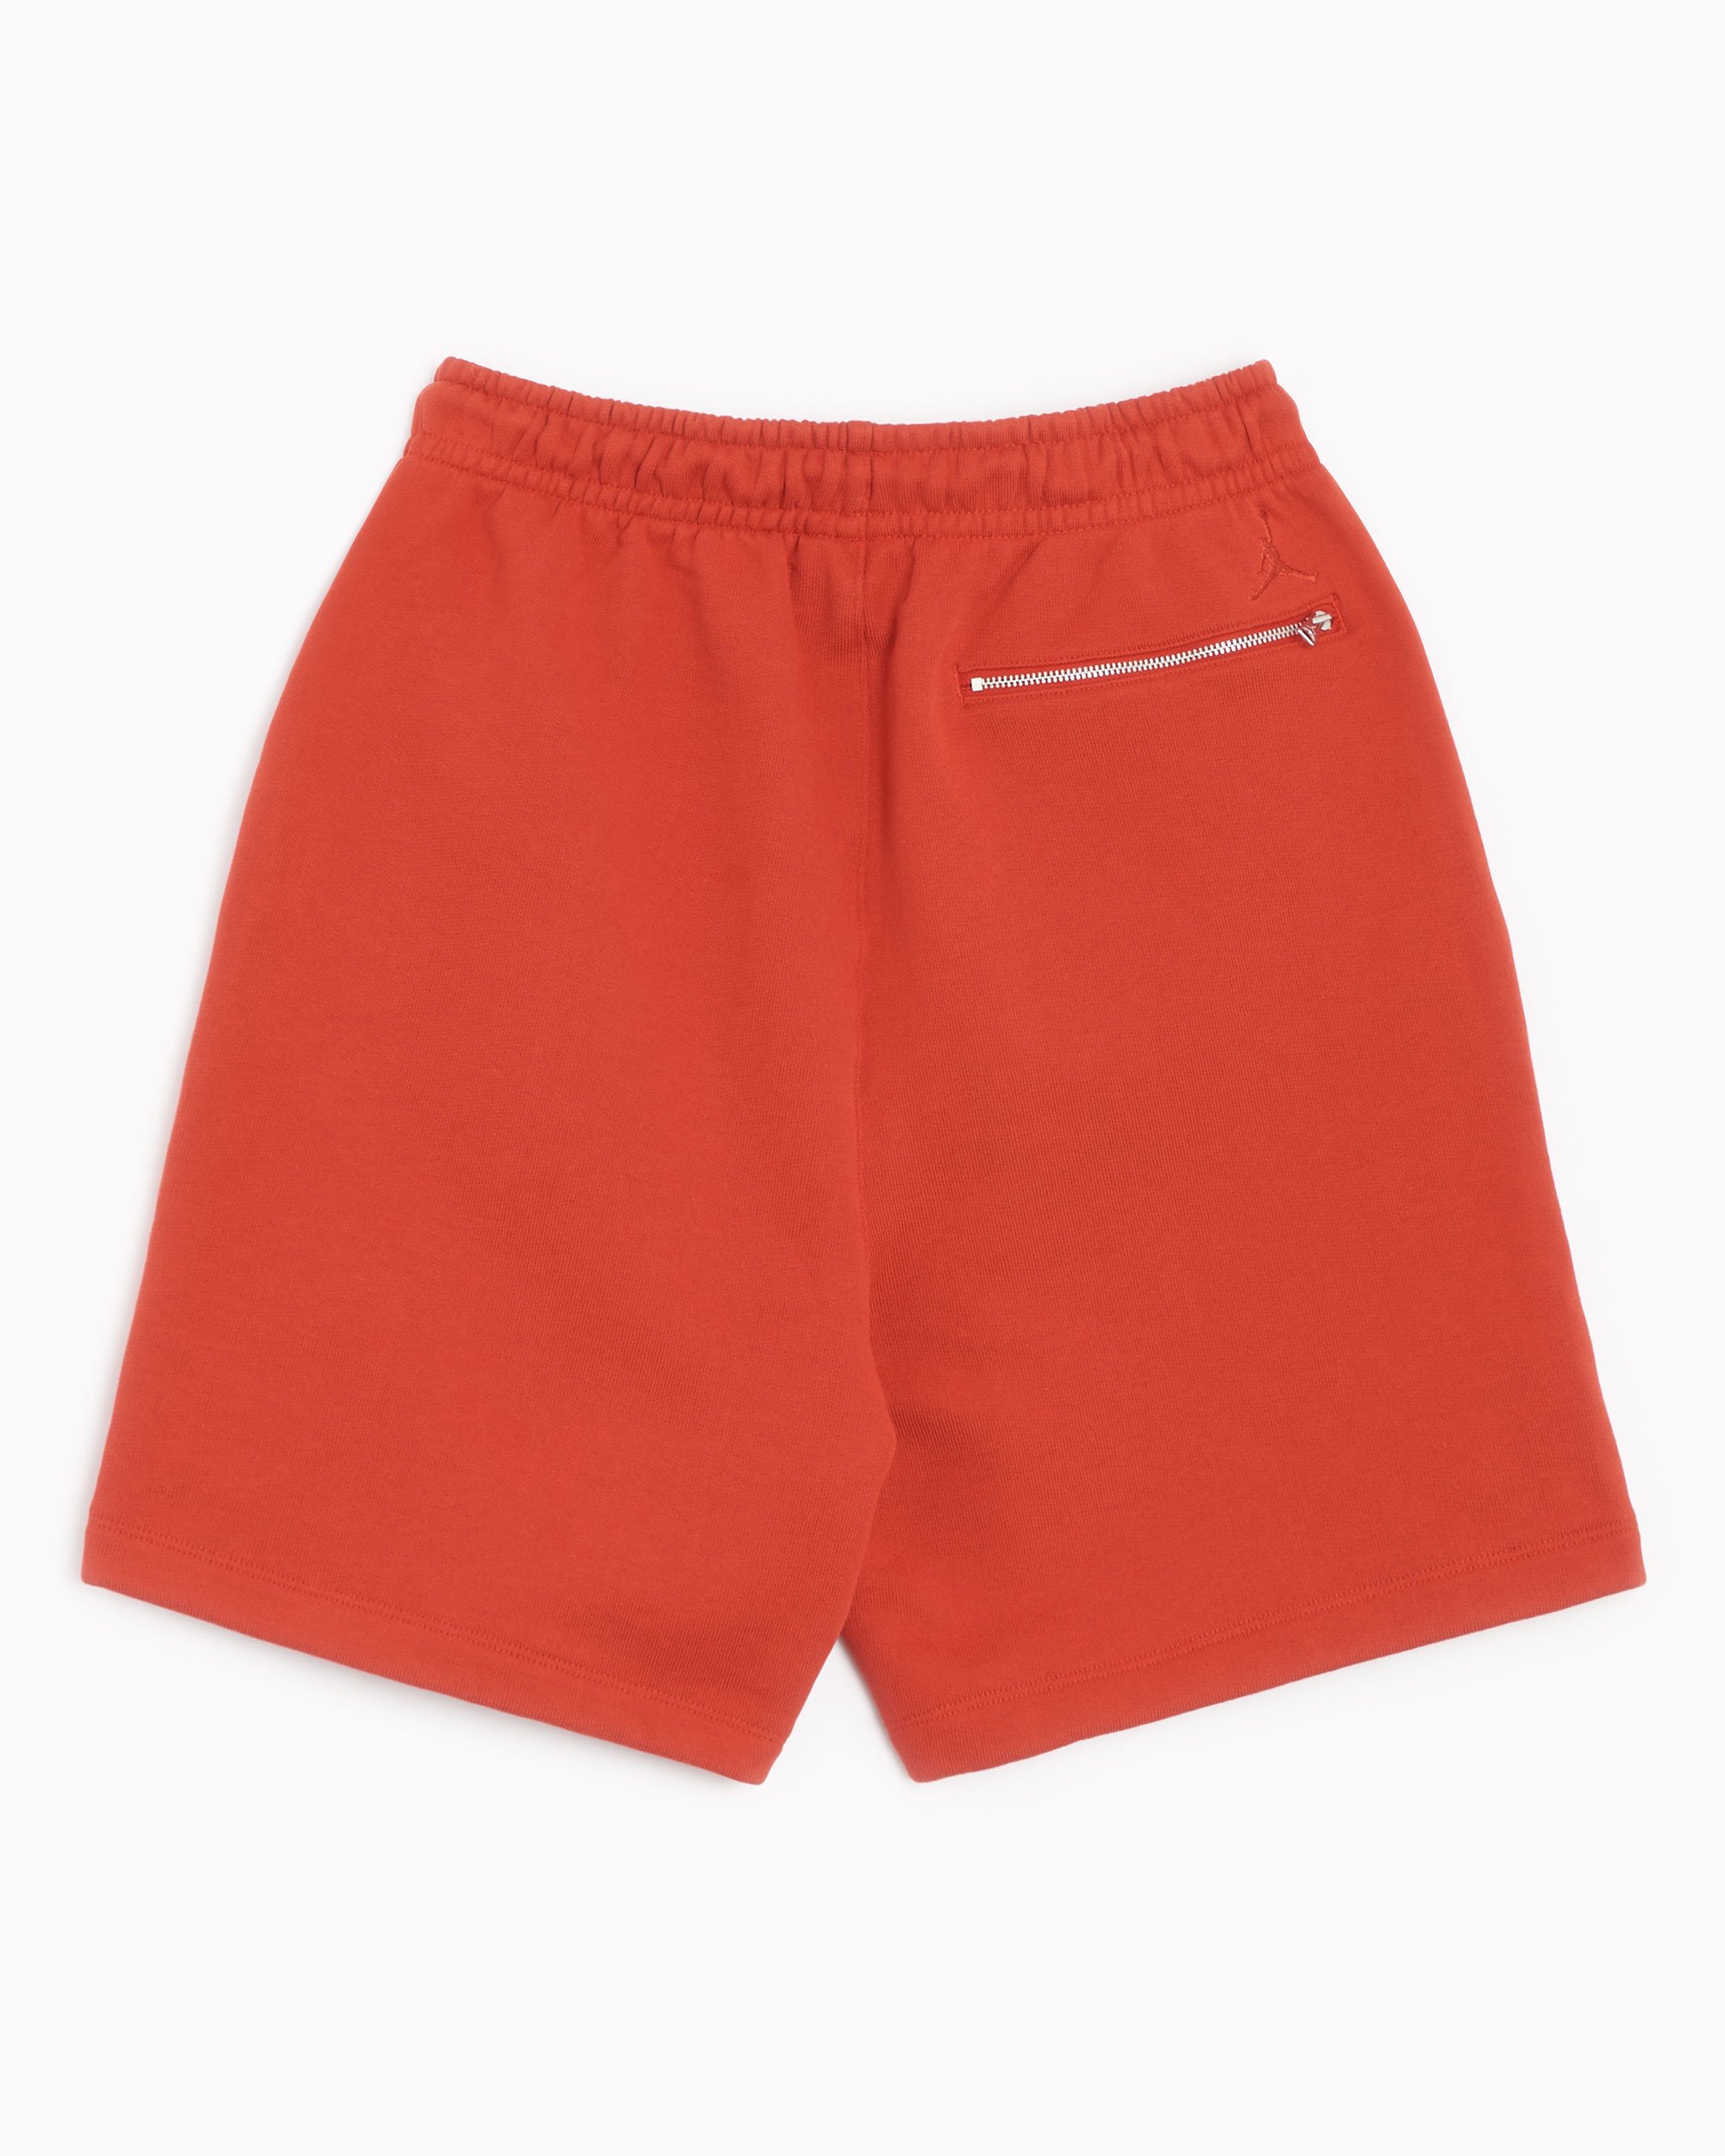 Jordan Air Jordan Wordmark Men's Fleece Shorts Red FJ0700-622